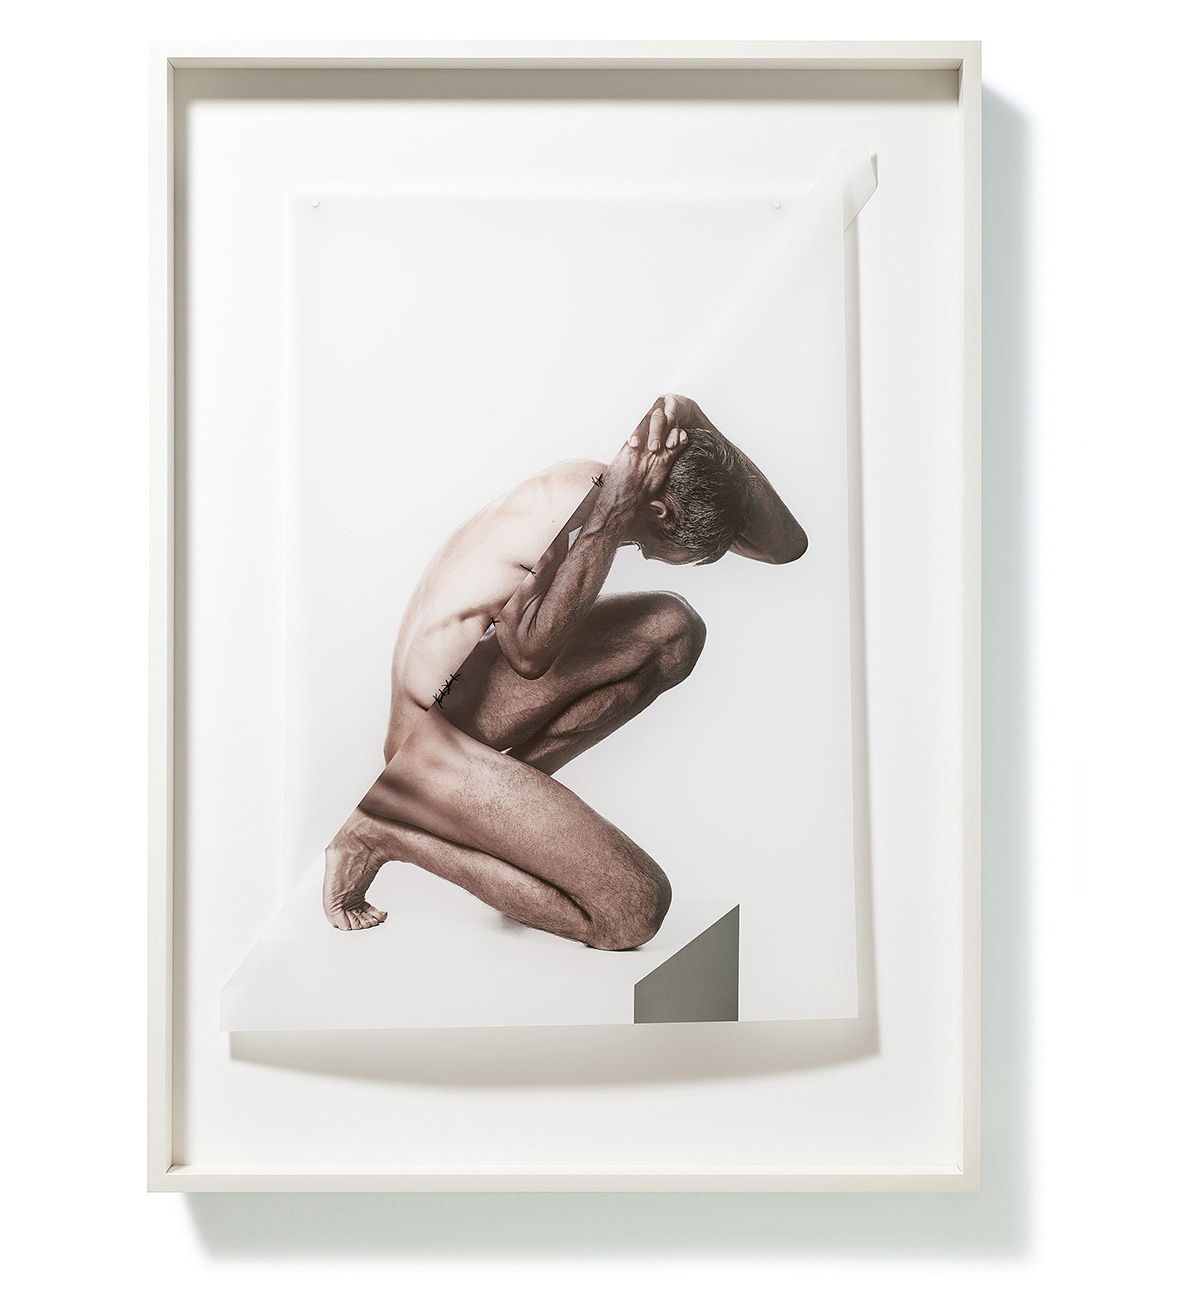 Zur Figur 07, 202090 x 70 x 7,5 cmPhotography, pigment print on transparent paper, sewed; framed